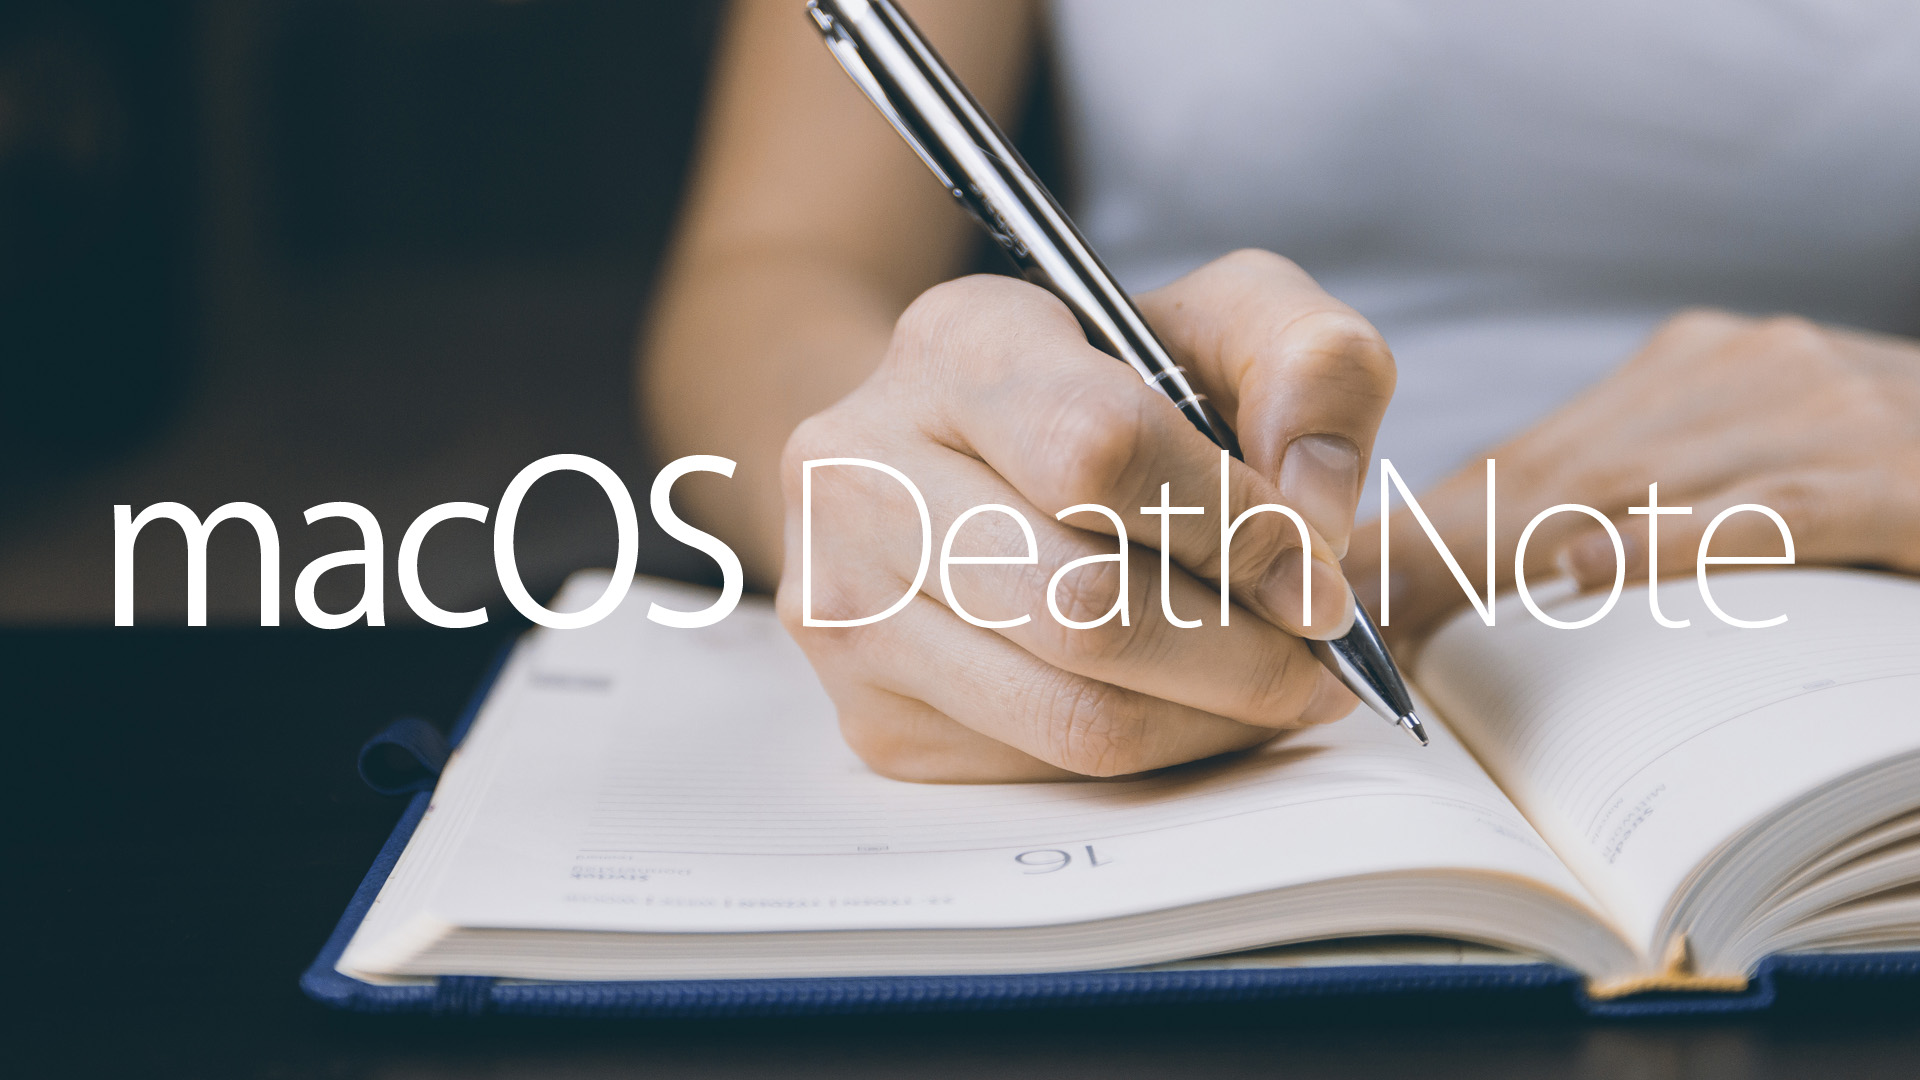 Mac OS Death Note